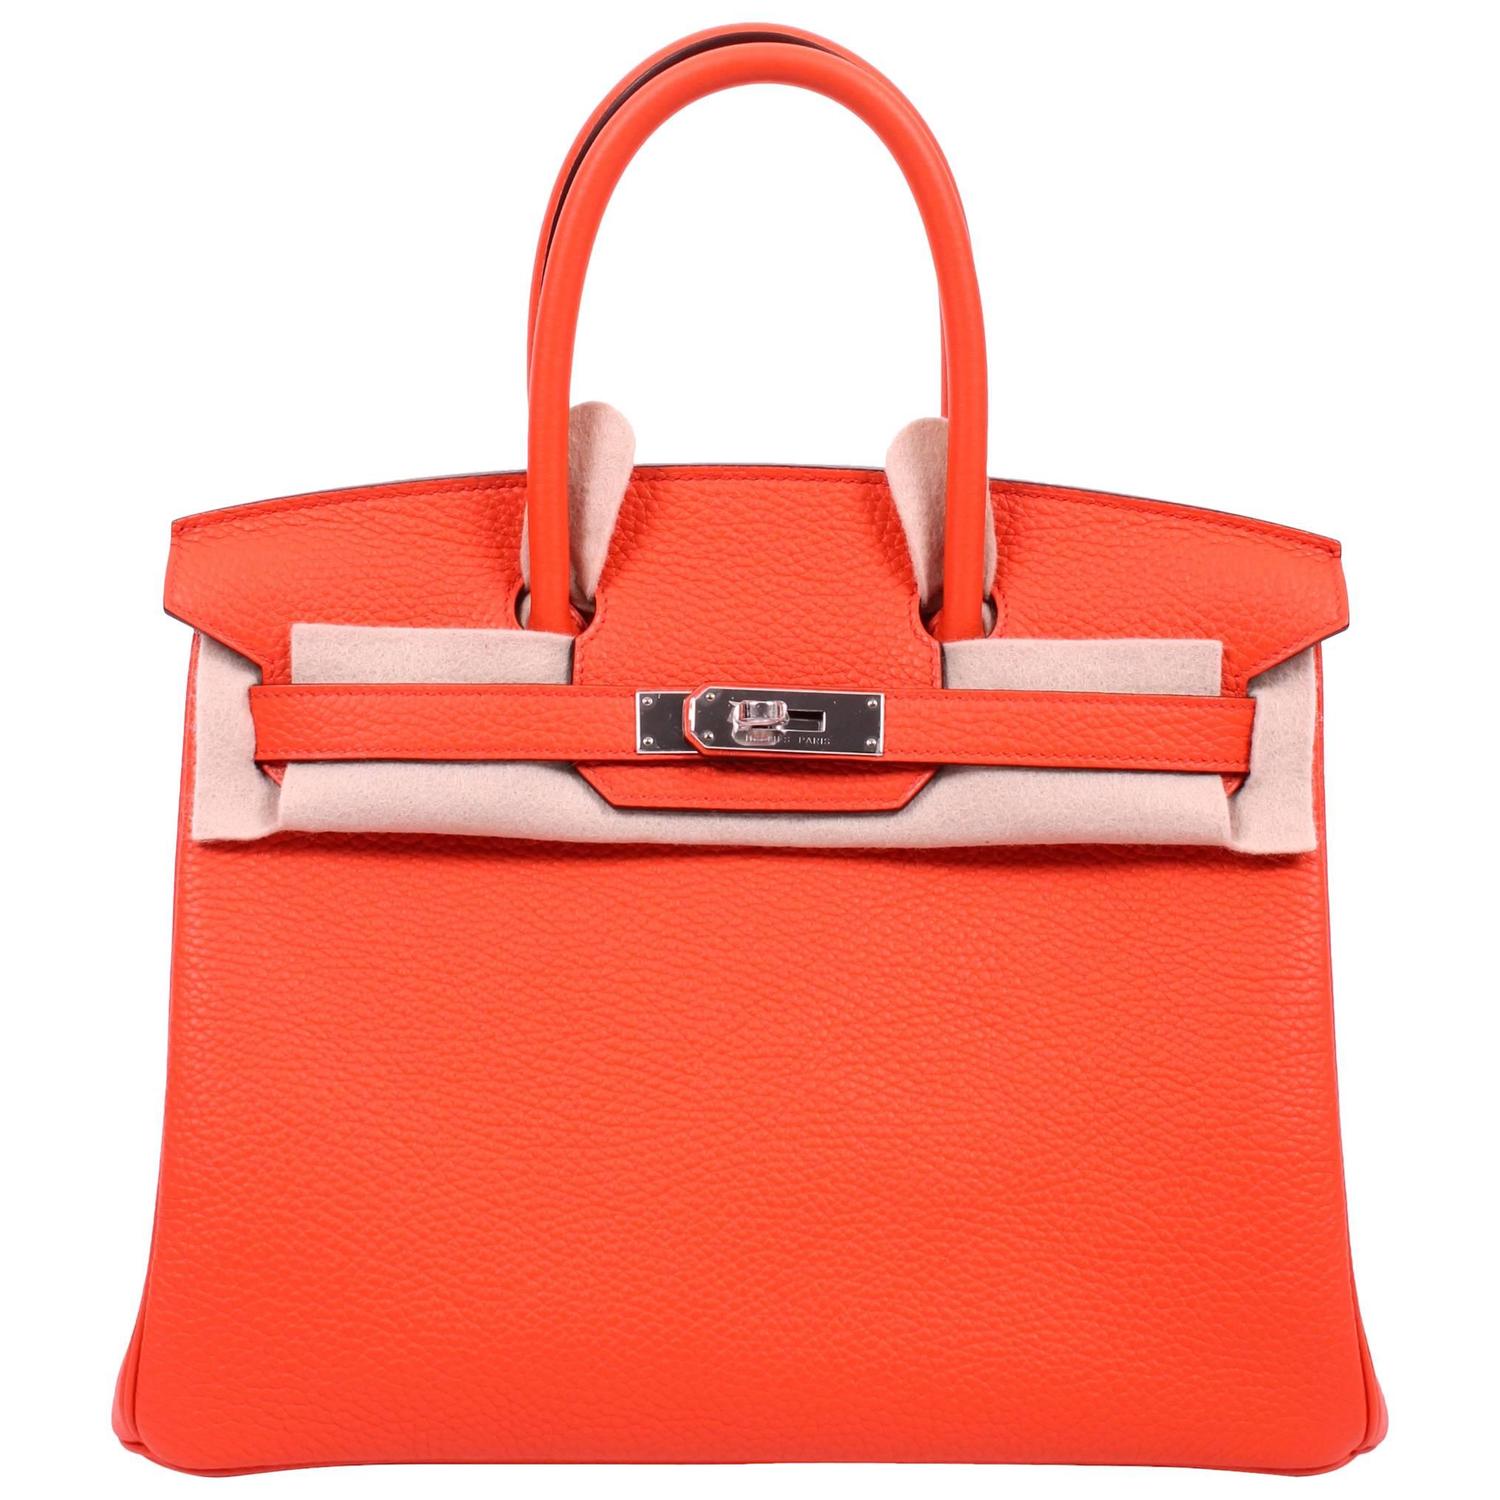 Hermes Birkin Bag 30 Orange Poppy Clemence - silver hardware For Sale at 1stdibs